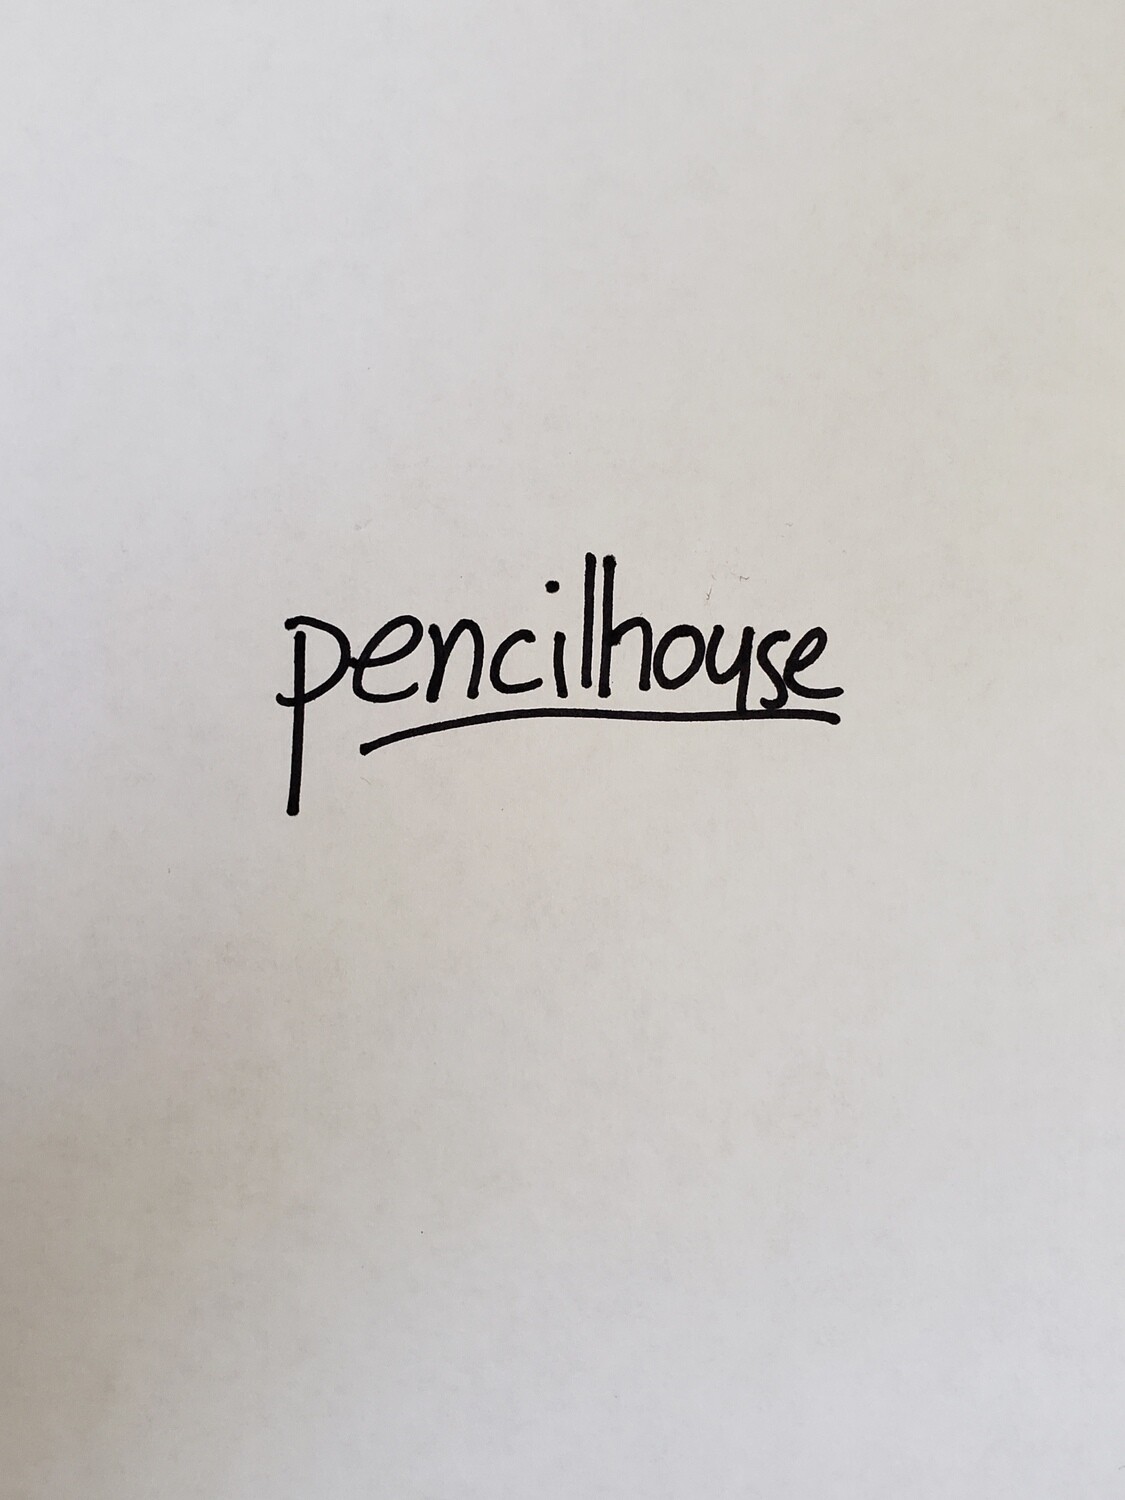 Contribute to Pencilhouse